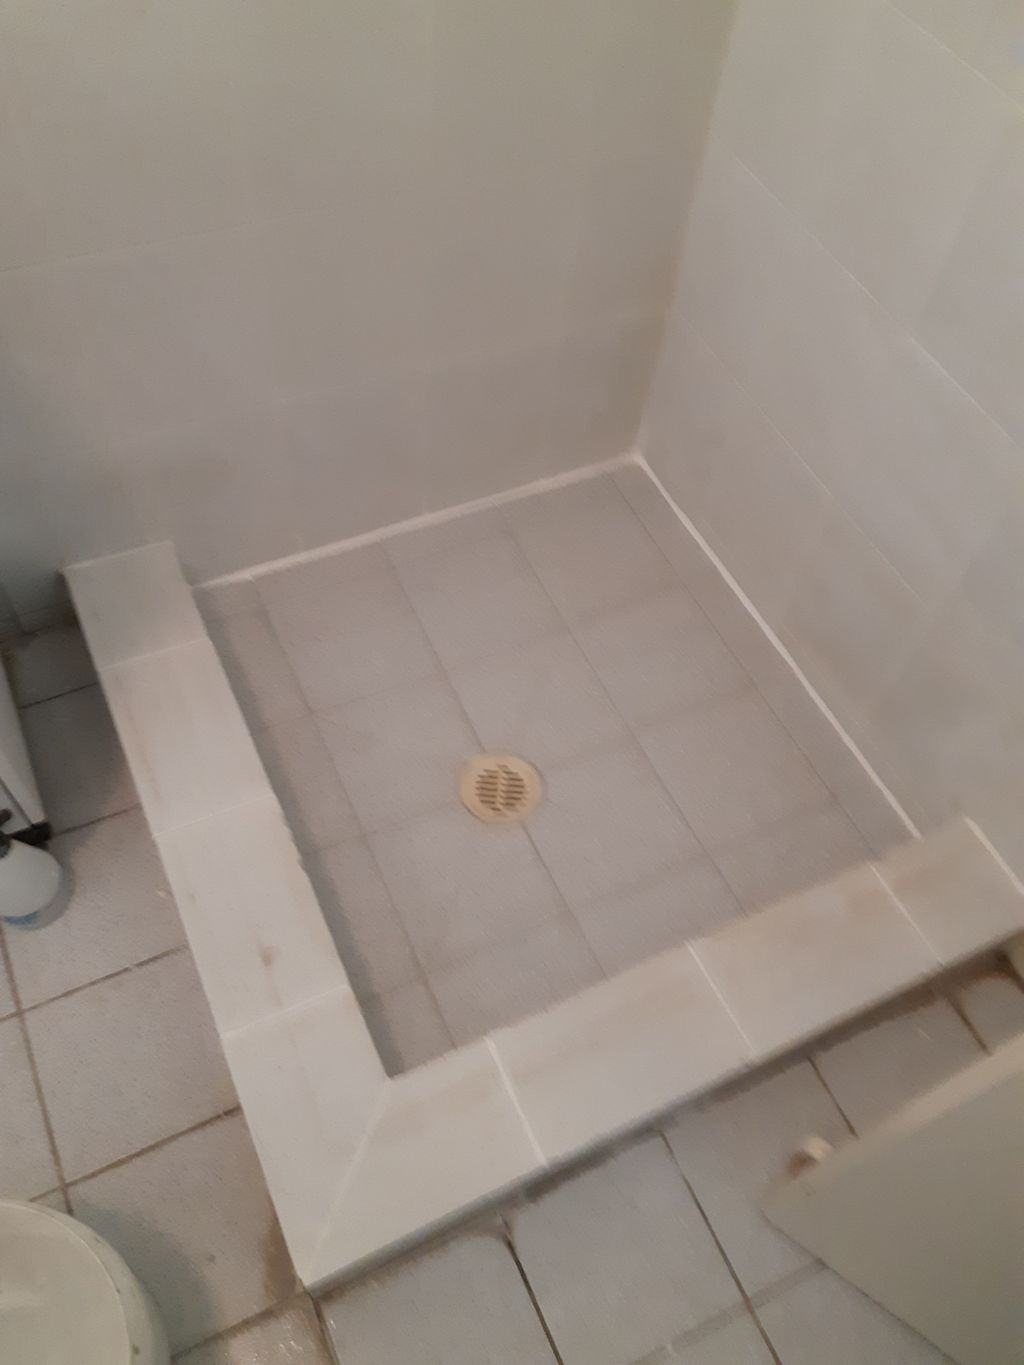 Aquashield Bathrooms - recent works after 1